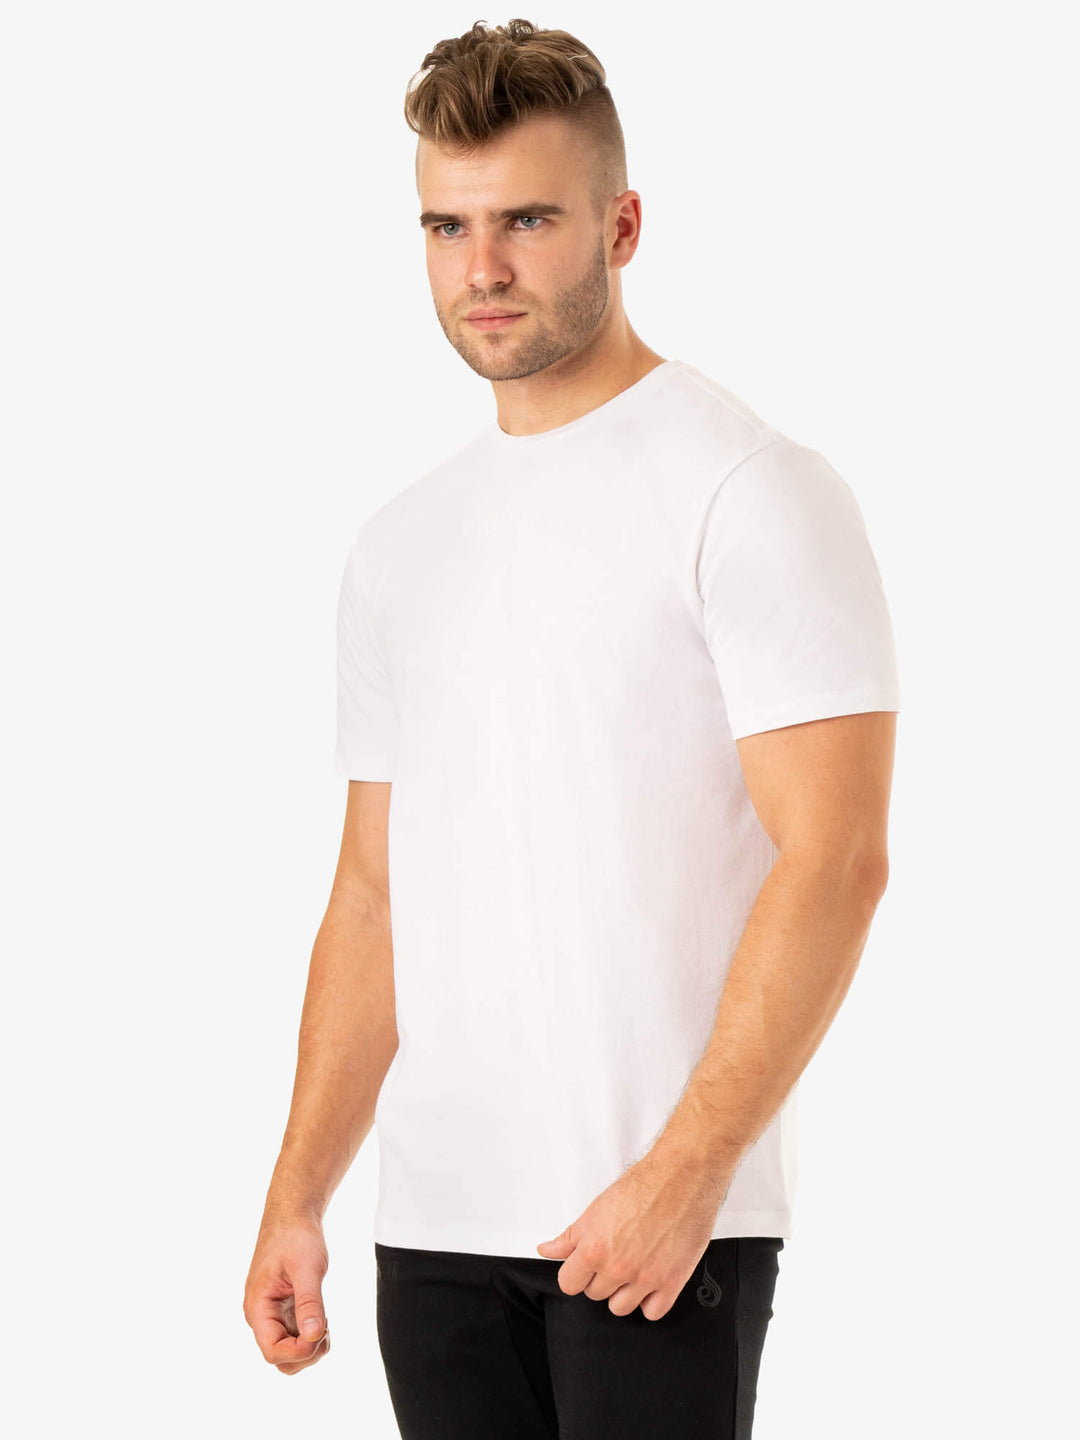 Limitless T-Shirt - White Clothing Ryderwear 